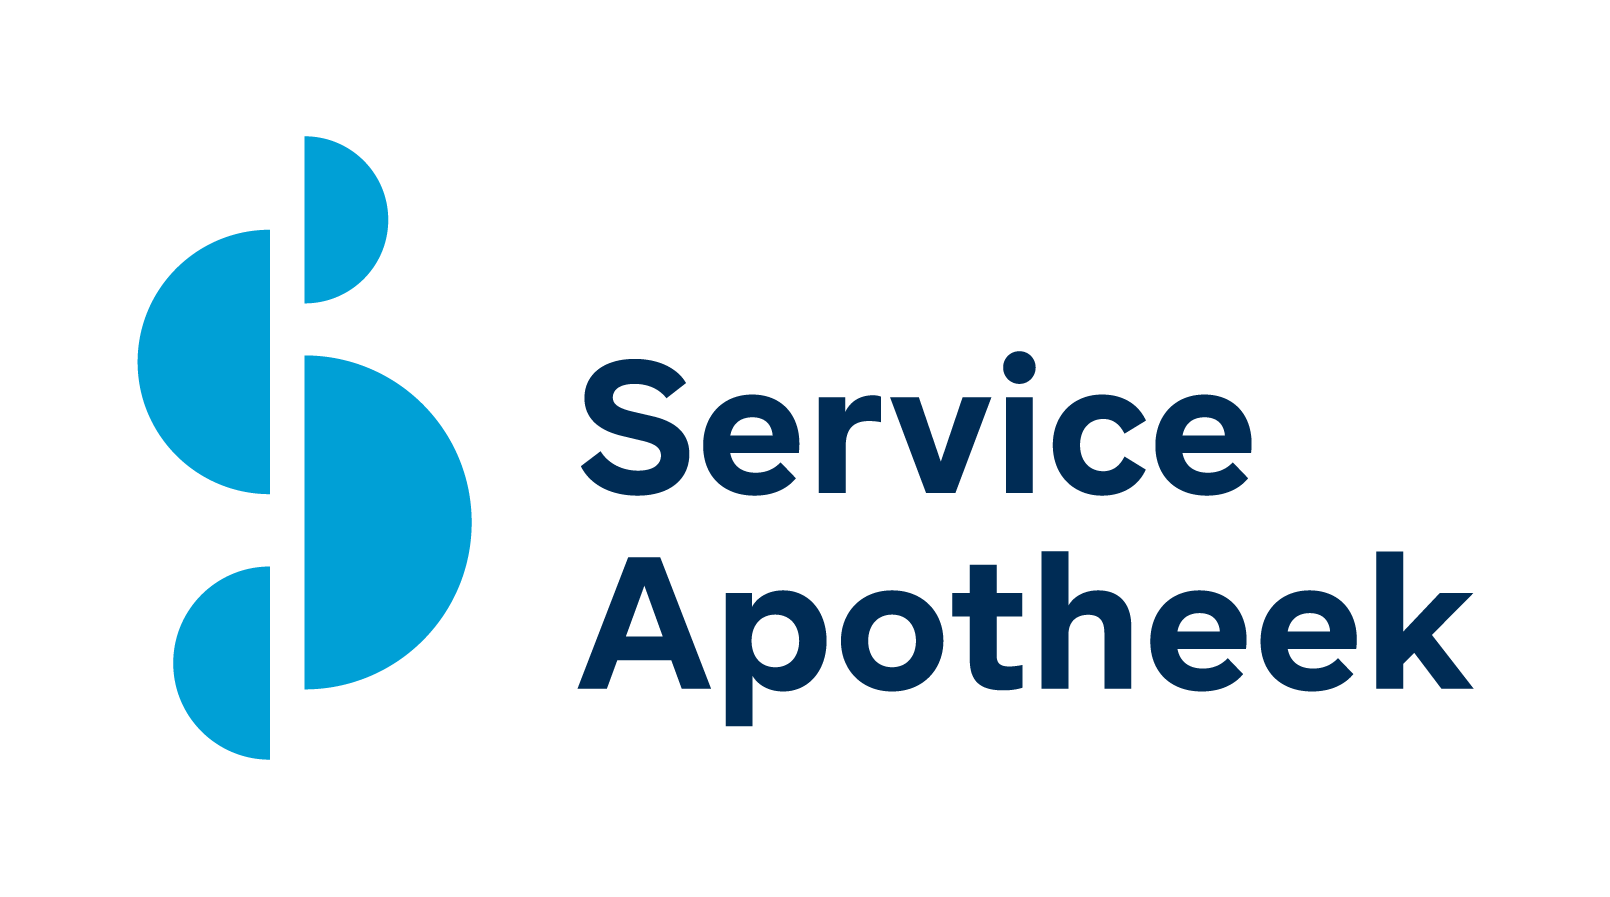 Service Apotheek